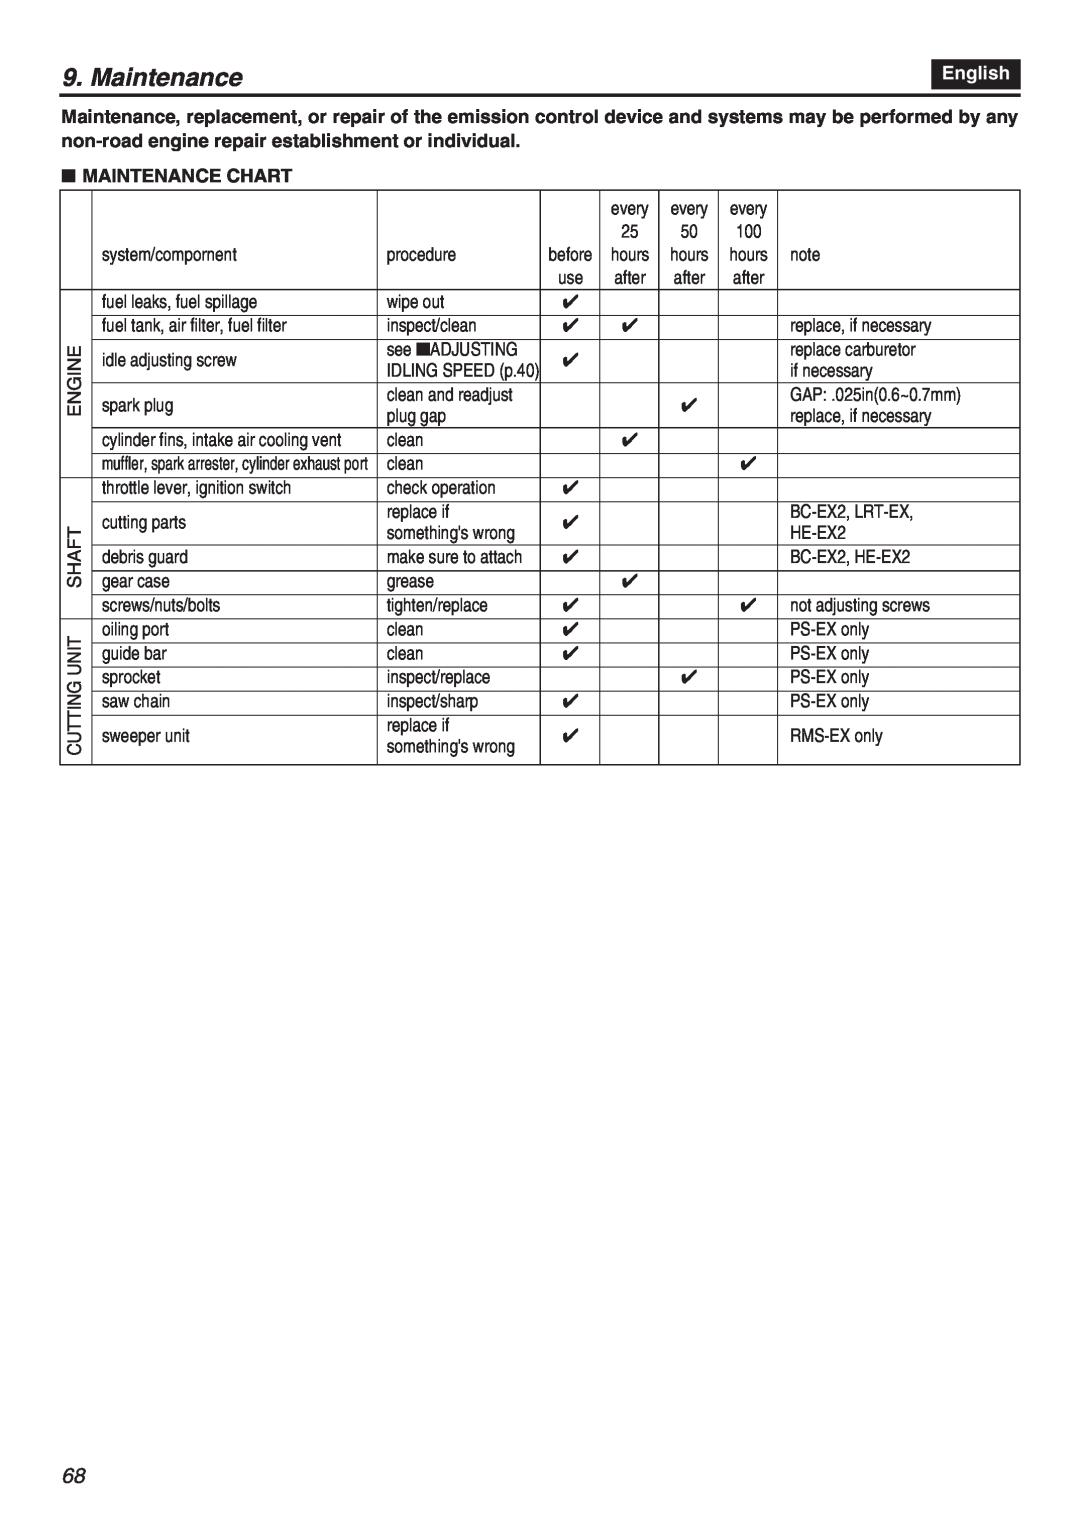 RedMax EXZ2401S-PH-CA manual English, Maintenance Chart 